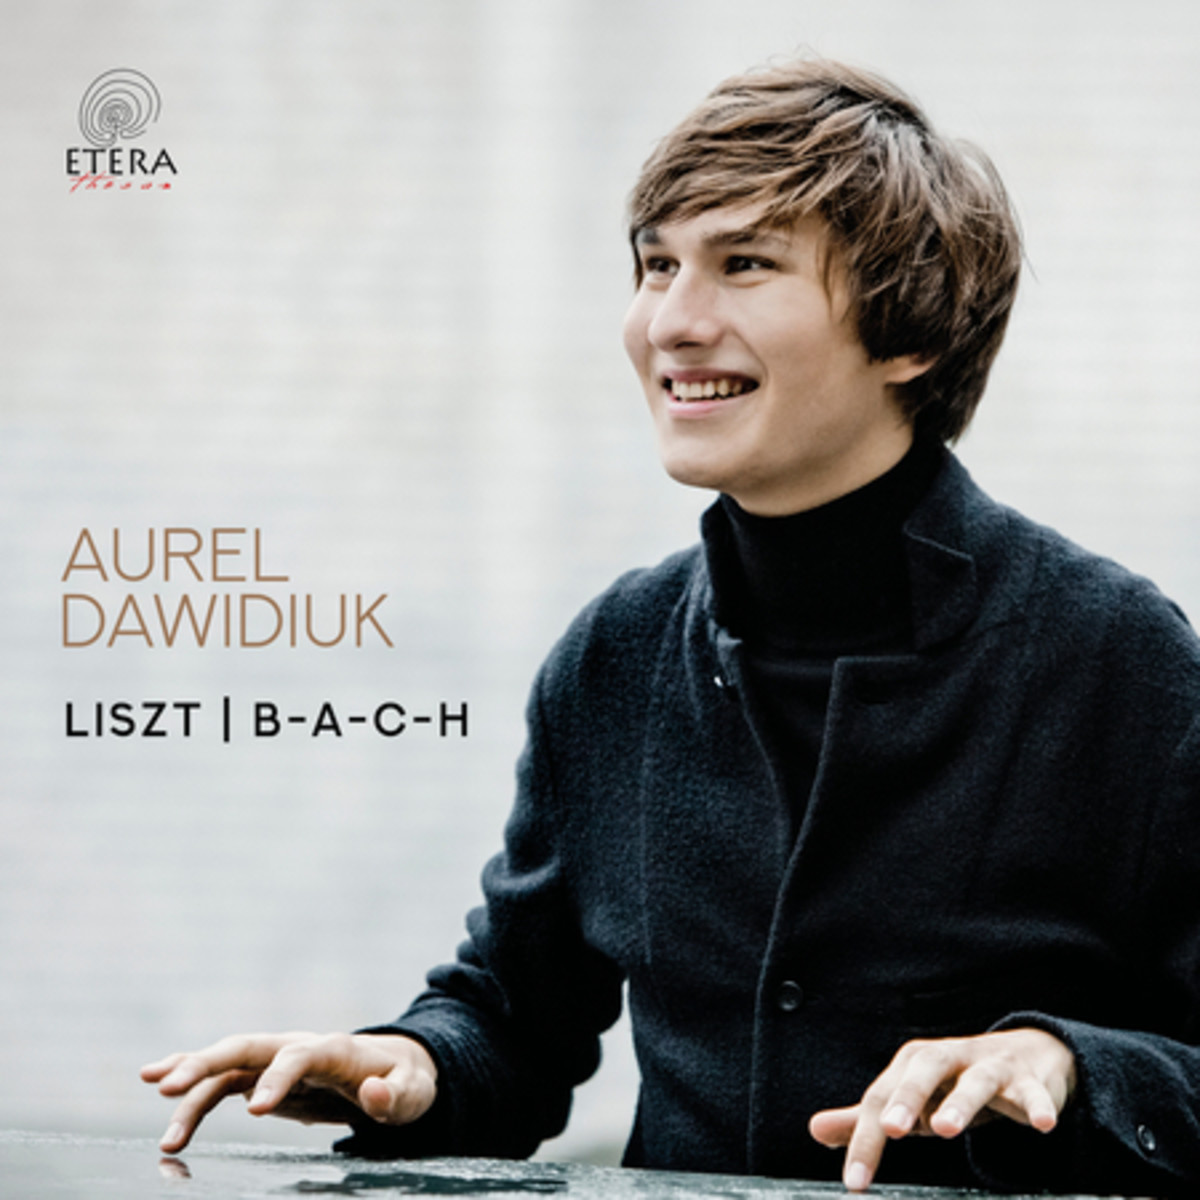 Aurel Dawidiuk‘s Classical CD Debut Does Bach and Liszt With Joy